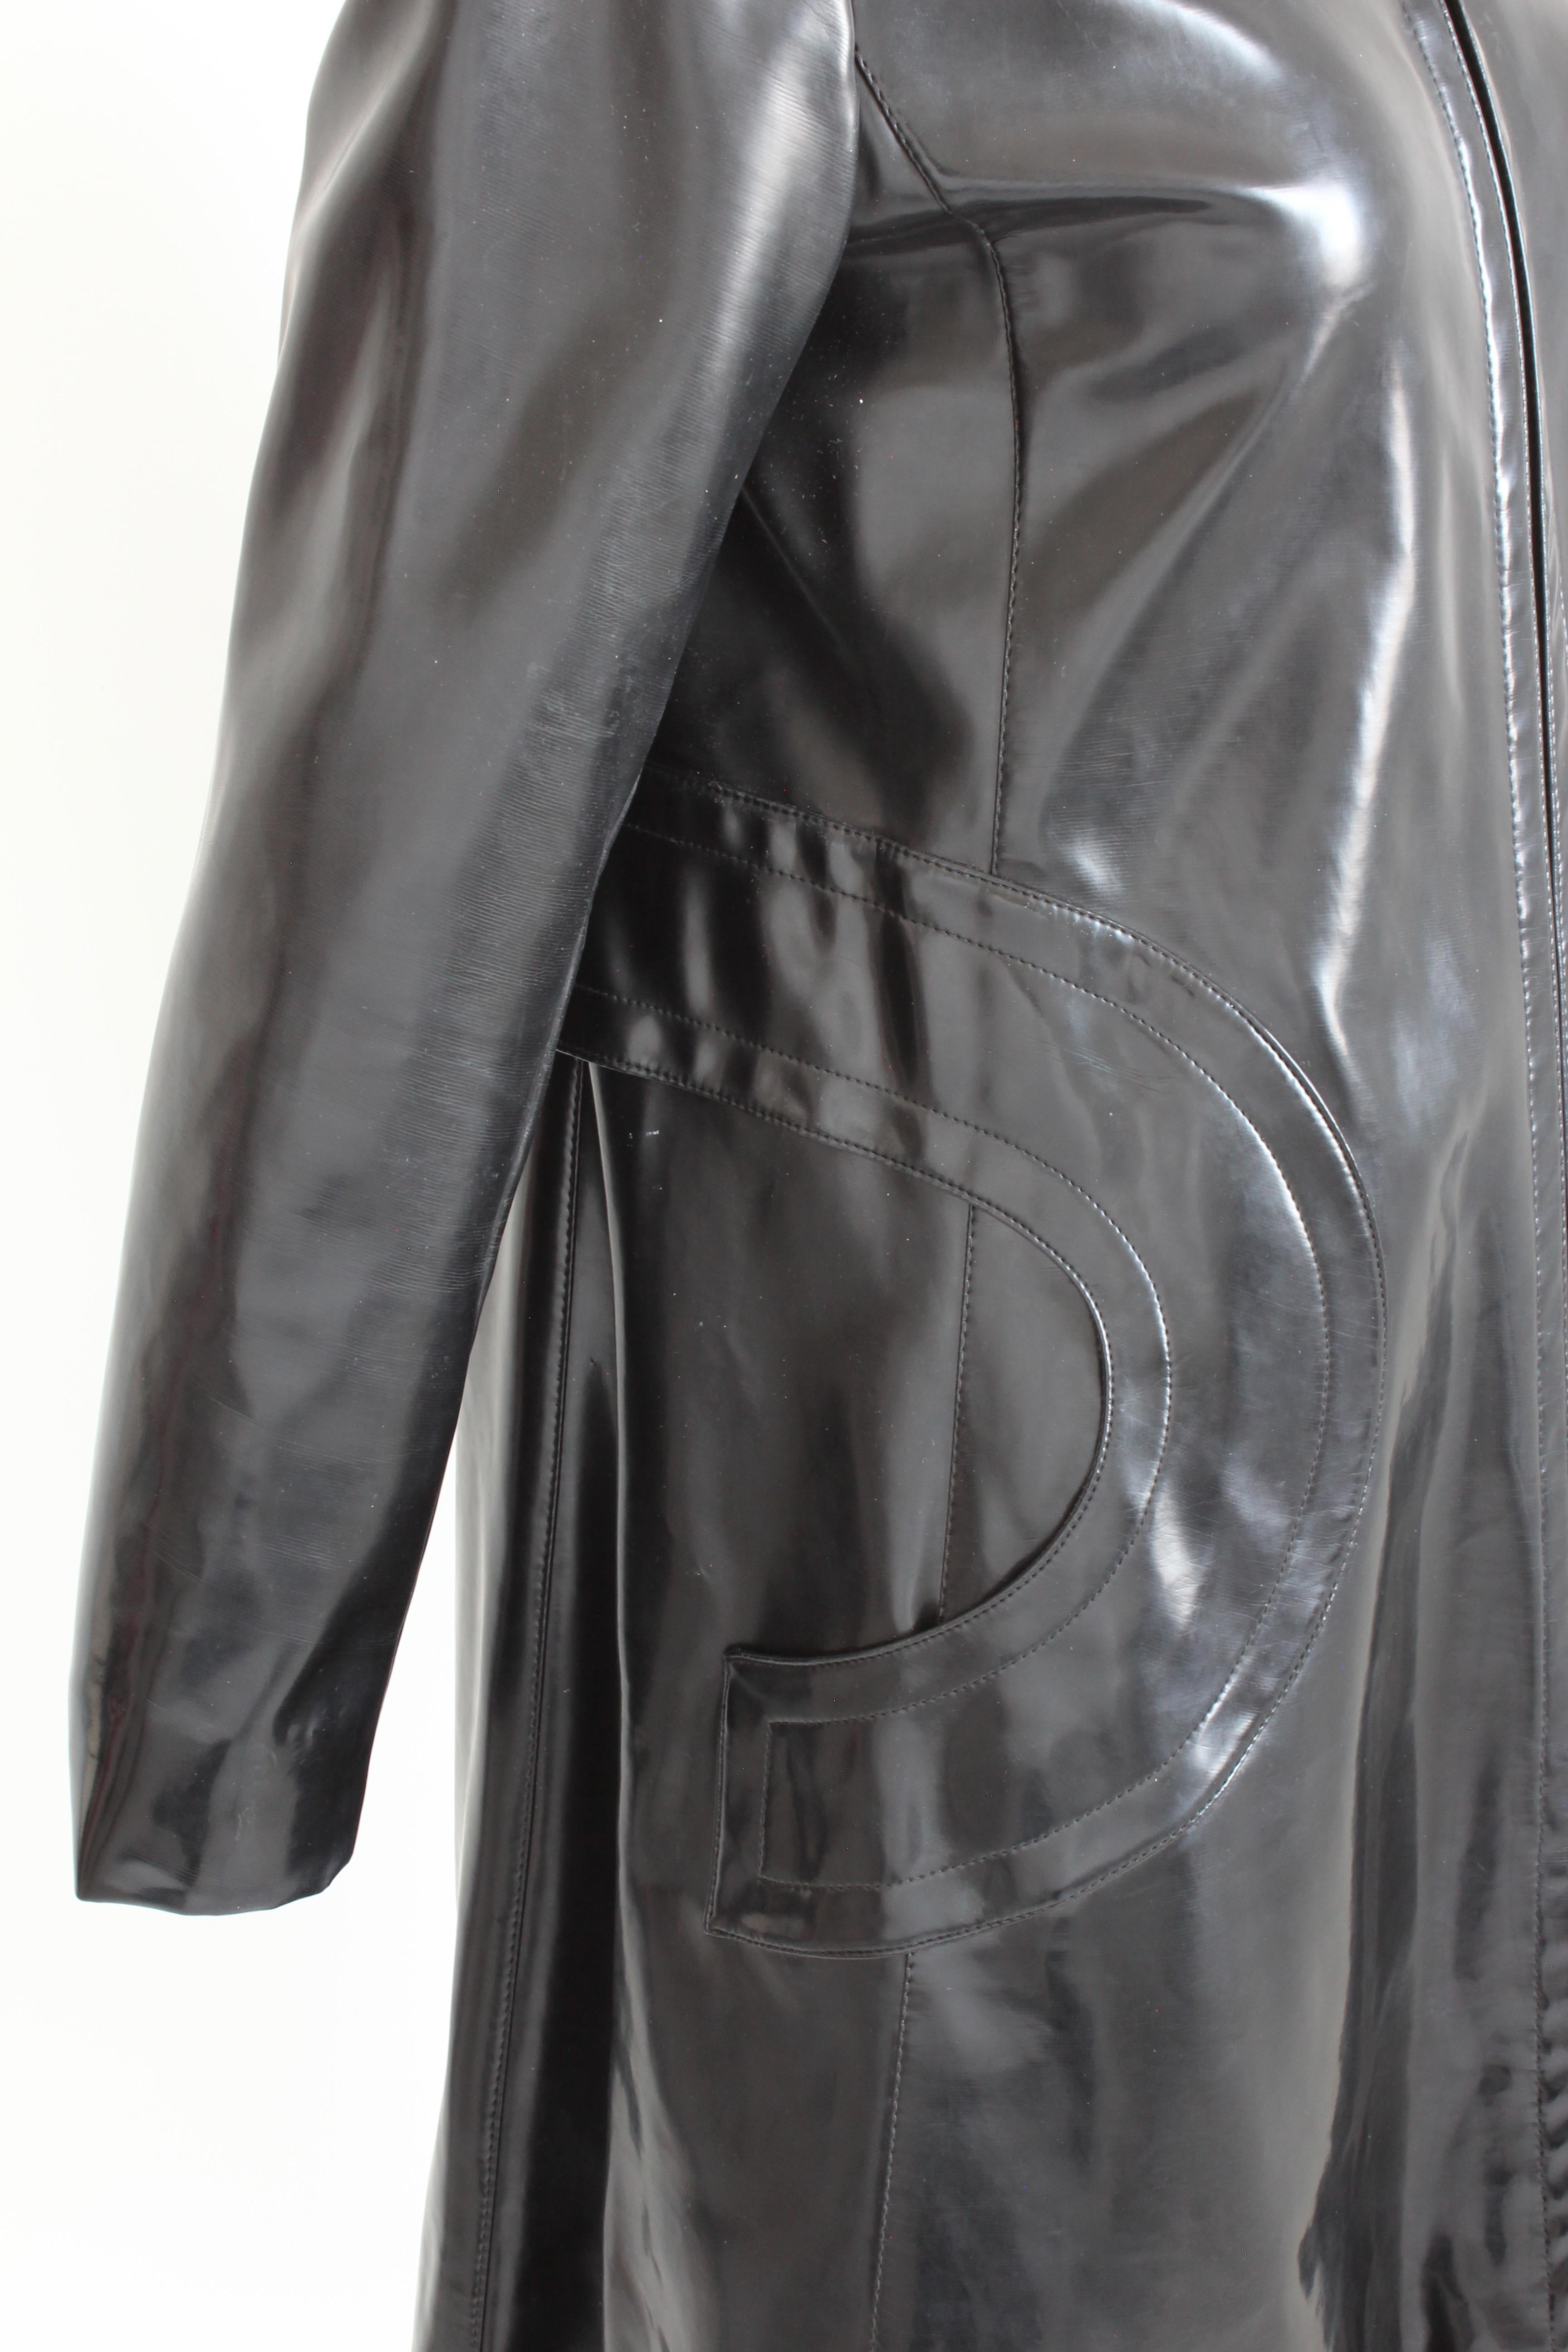 Women's Pierre Cardin Space Age Coat Black Vinyl Circle Pocket Jacket 1960s S/M 